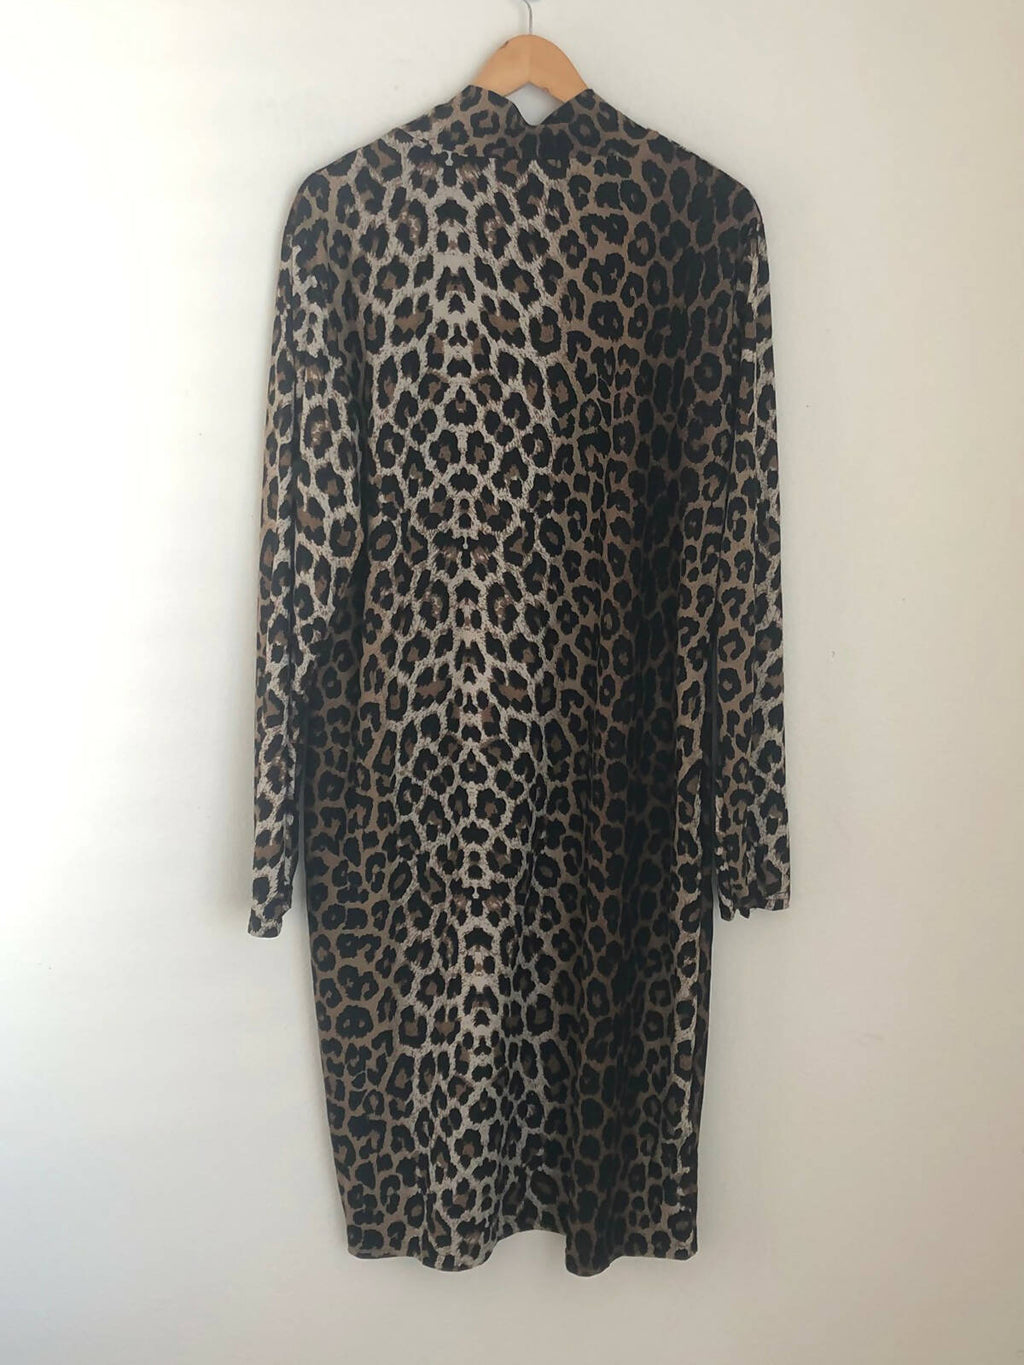 Leopard print bodycon dress